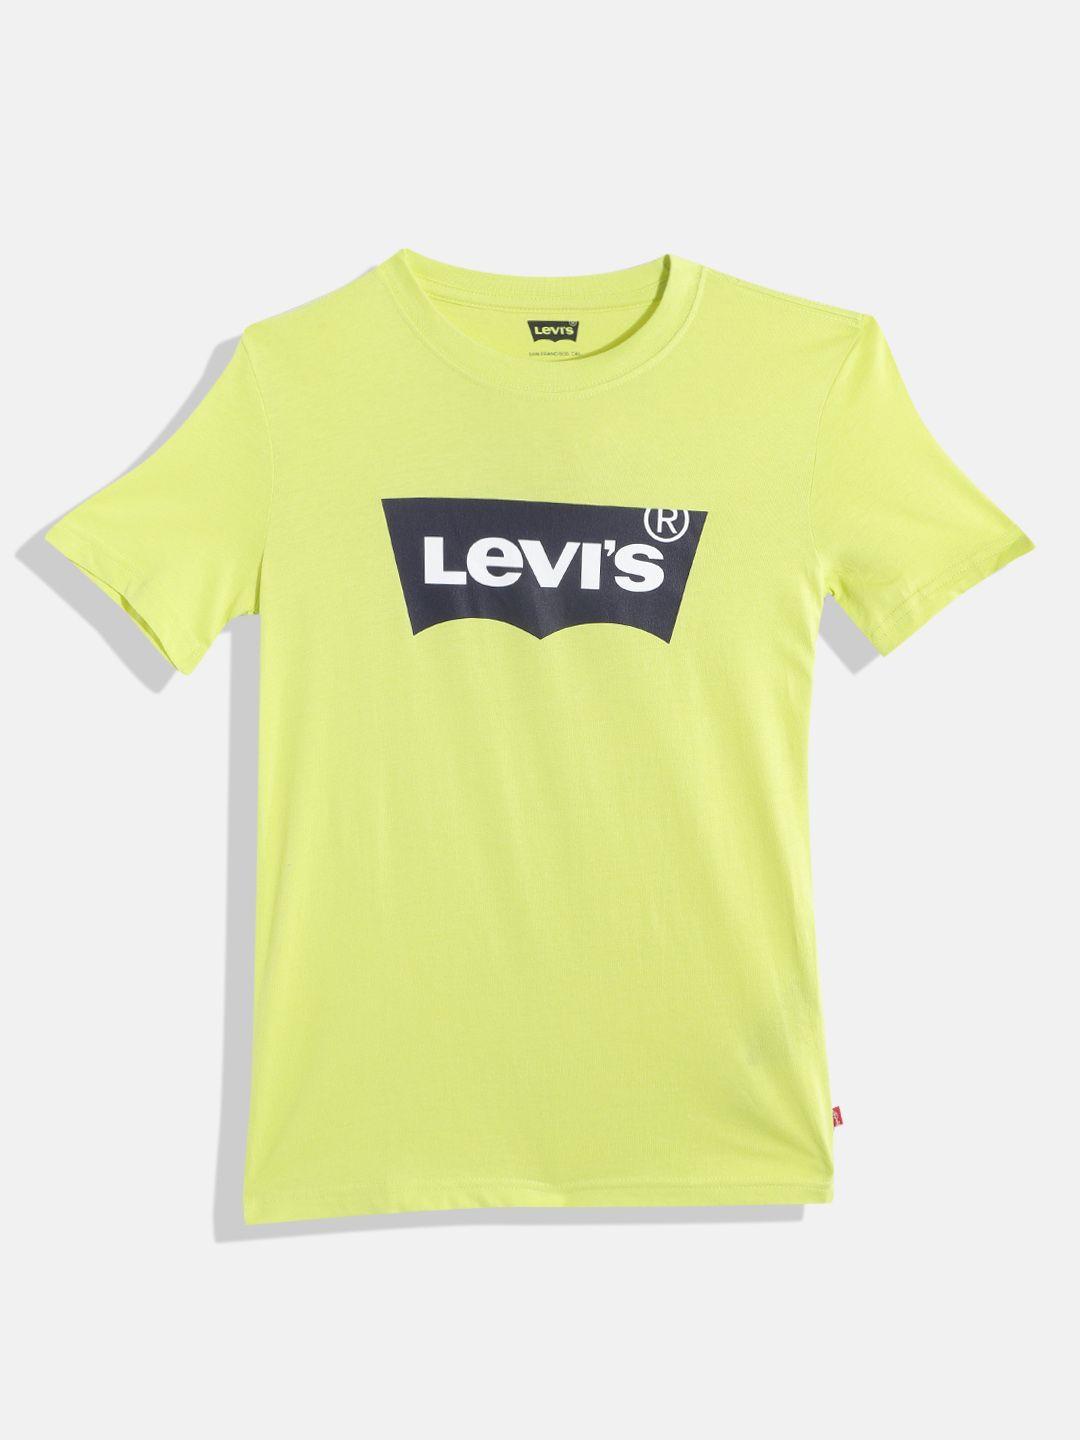 levis boys yellow & black brand logo printed pure cotton t-shirt